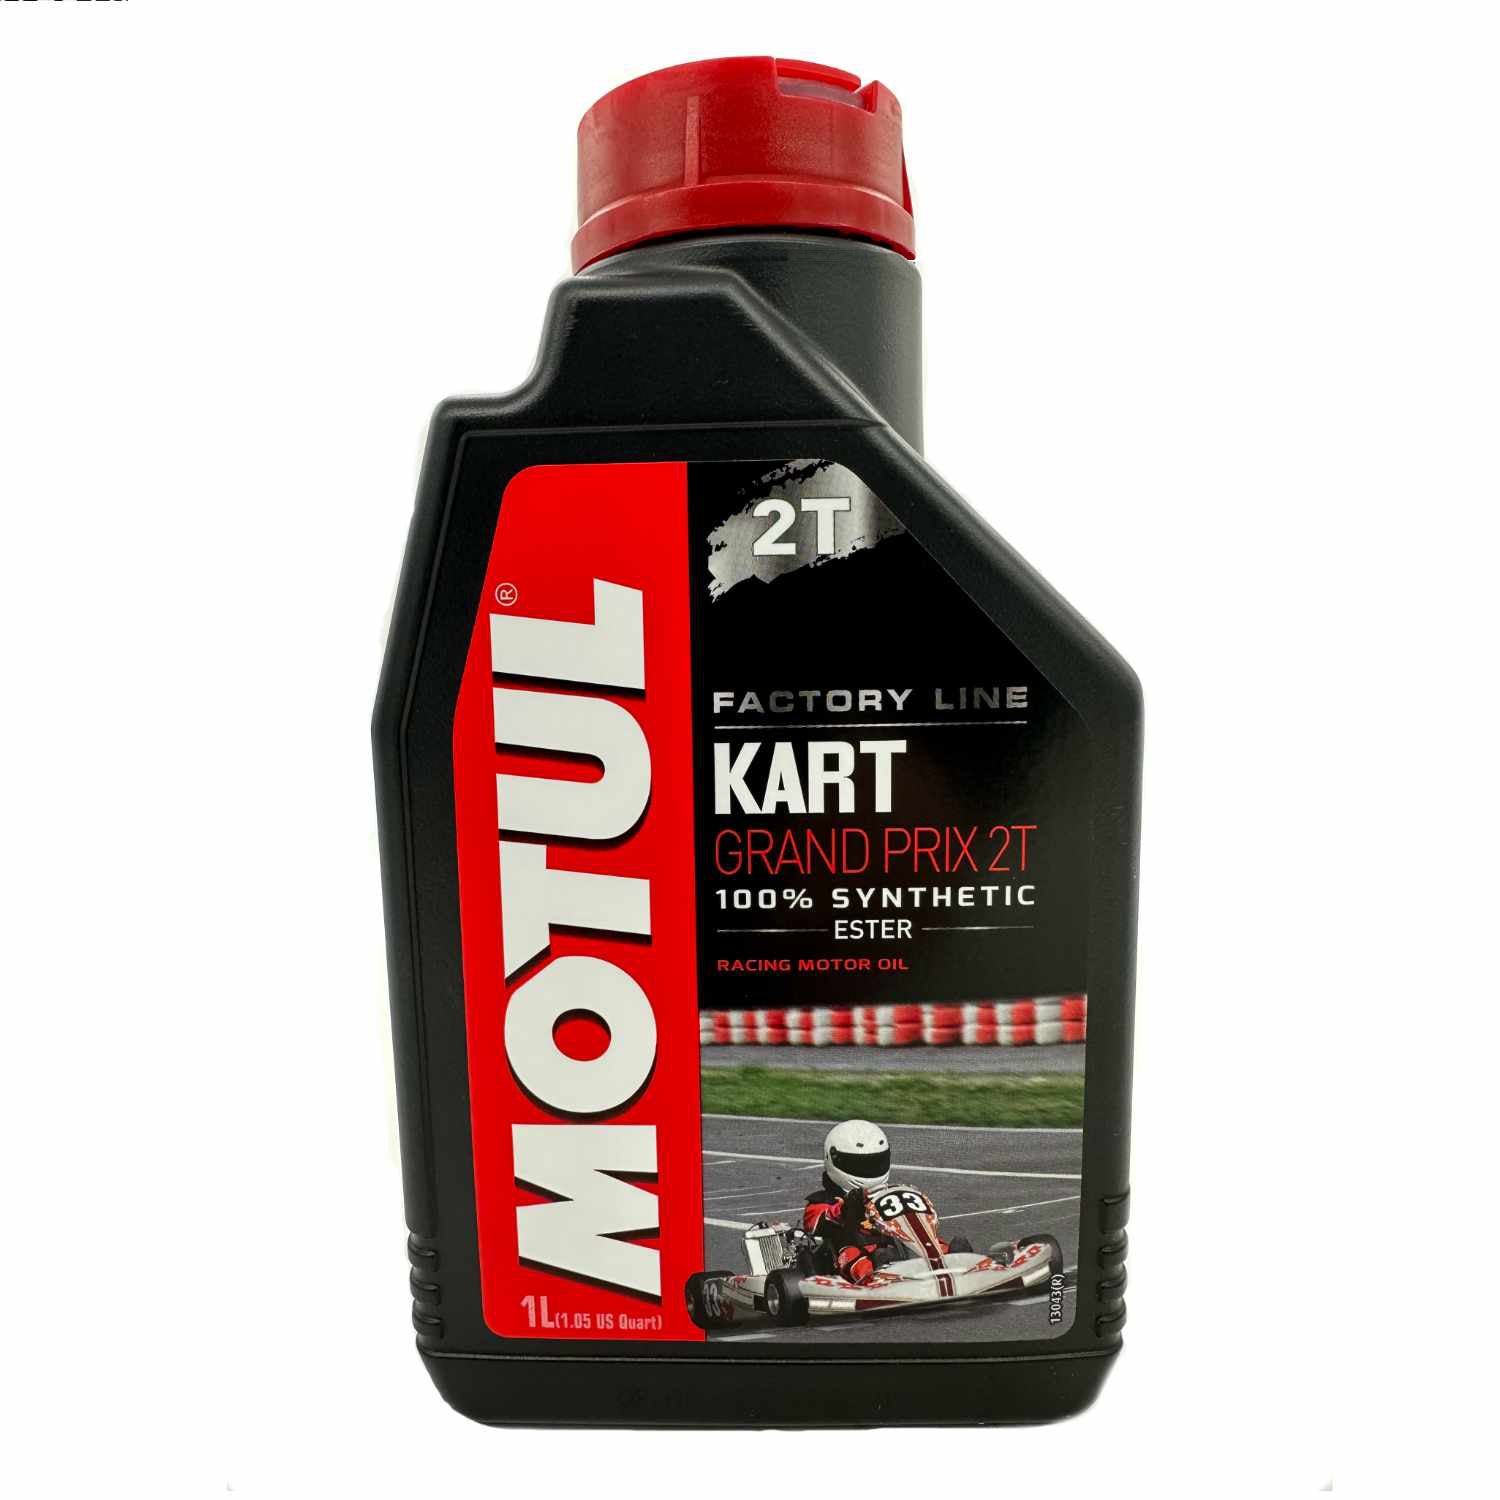 Motul Factory Line Kart Grand Prix 2T Synthetic Racing Motor Oil - 1 Liter